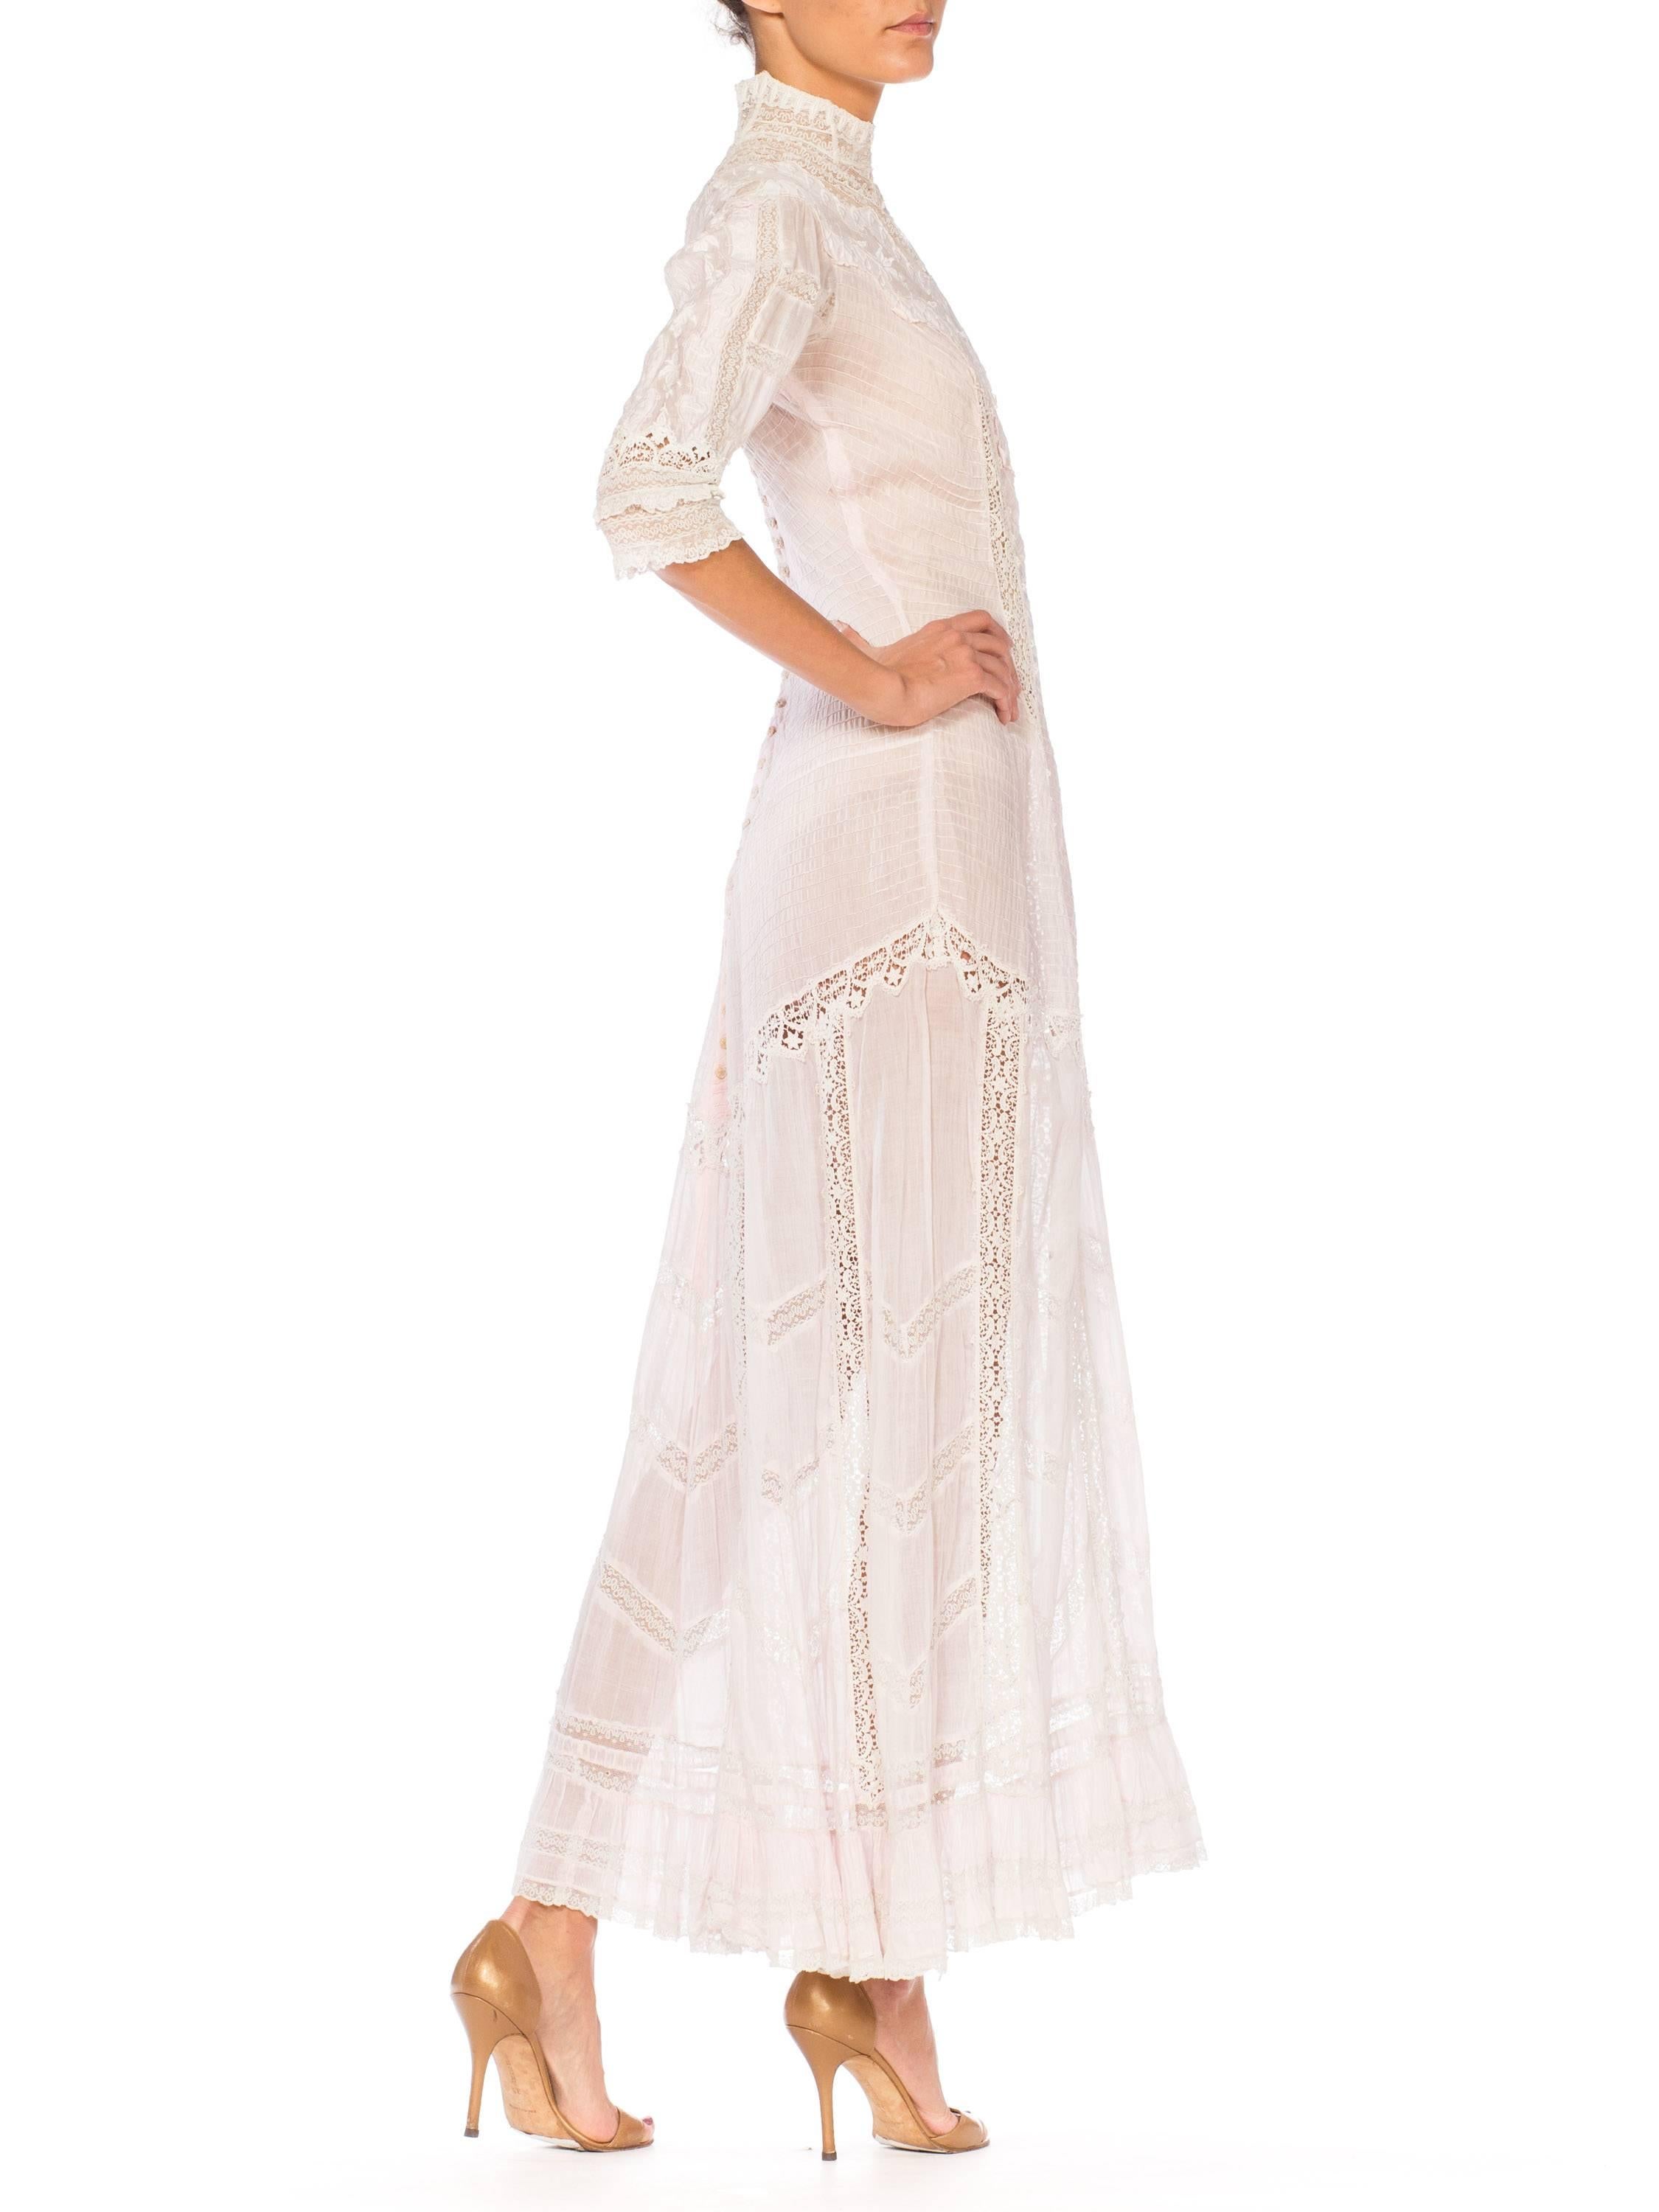 Belle Epoque Swan Neck Princess Line Victorian Organic Cotton and Lace Tea Dress 8